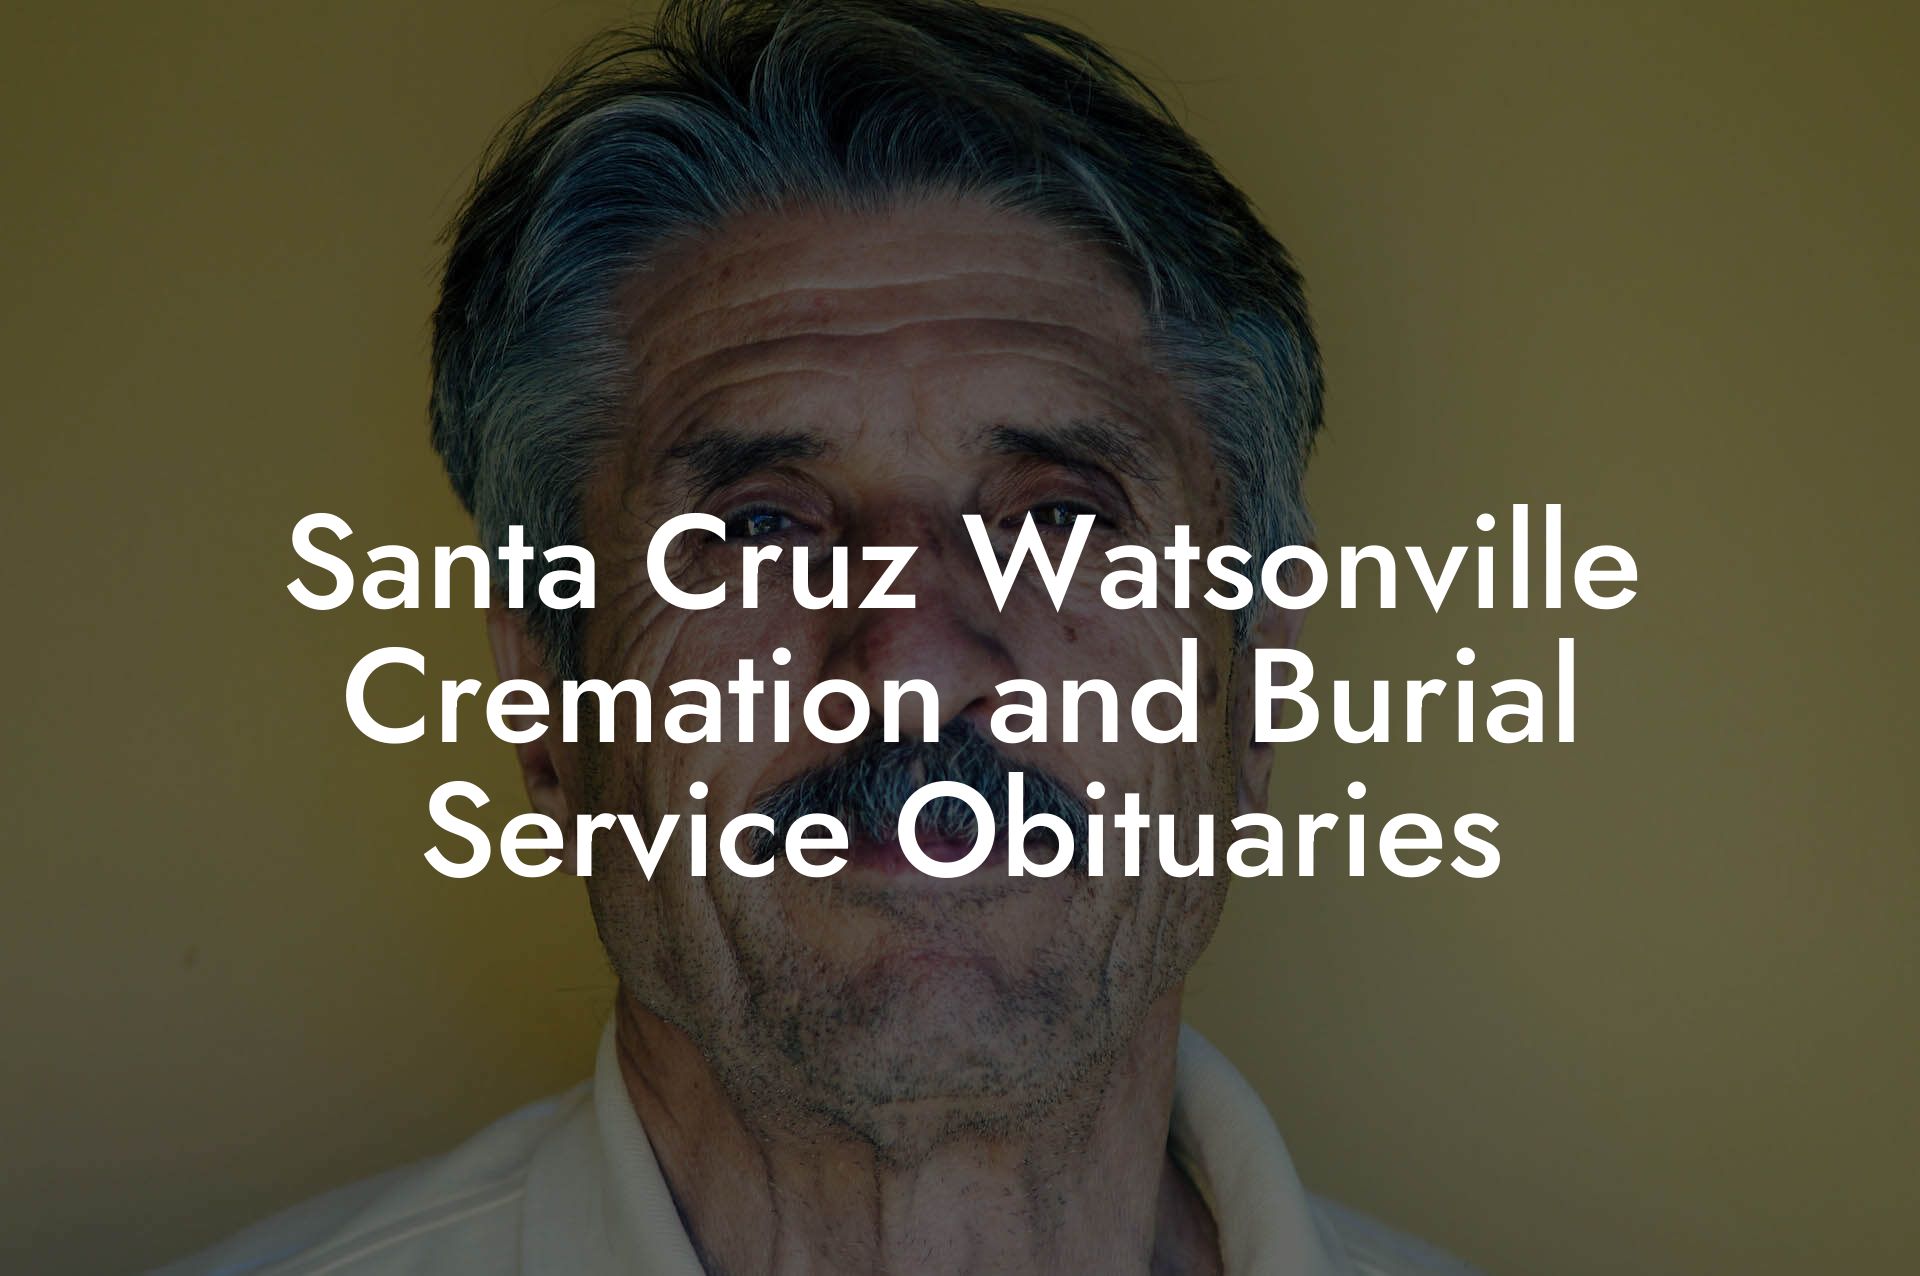 Santa Cruz Watsonville Cremation and Burial Service Obituaries